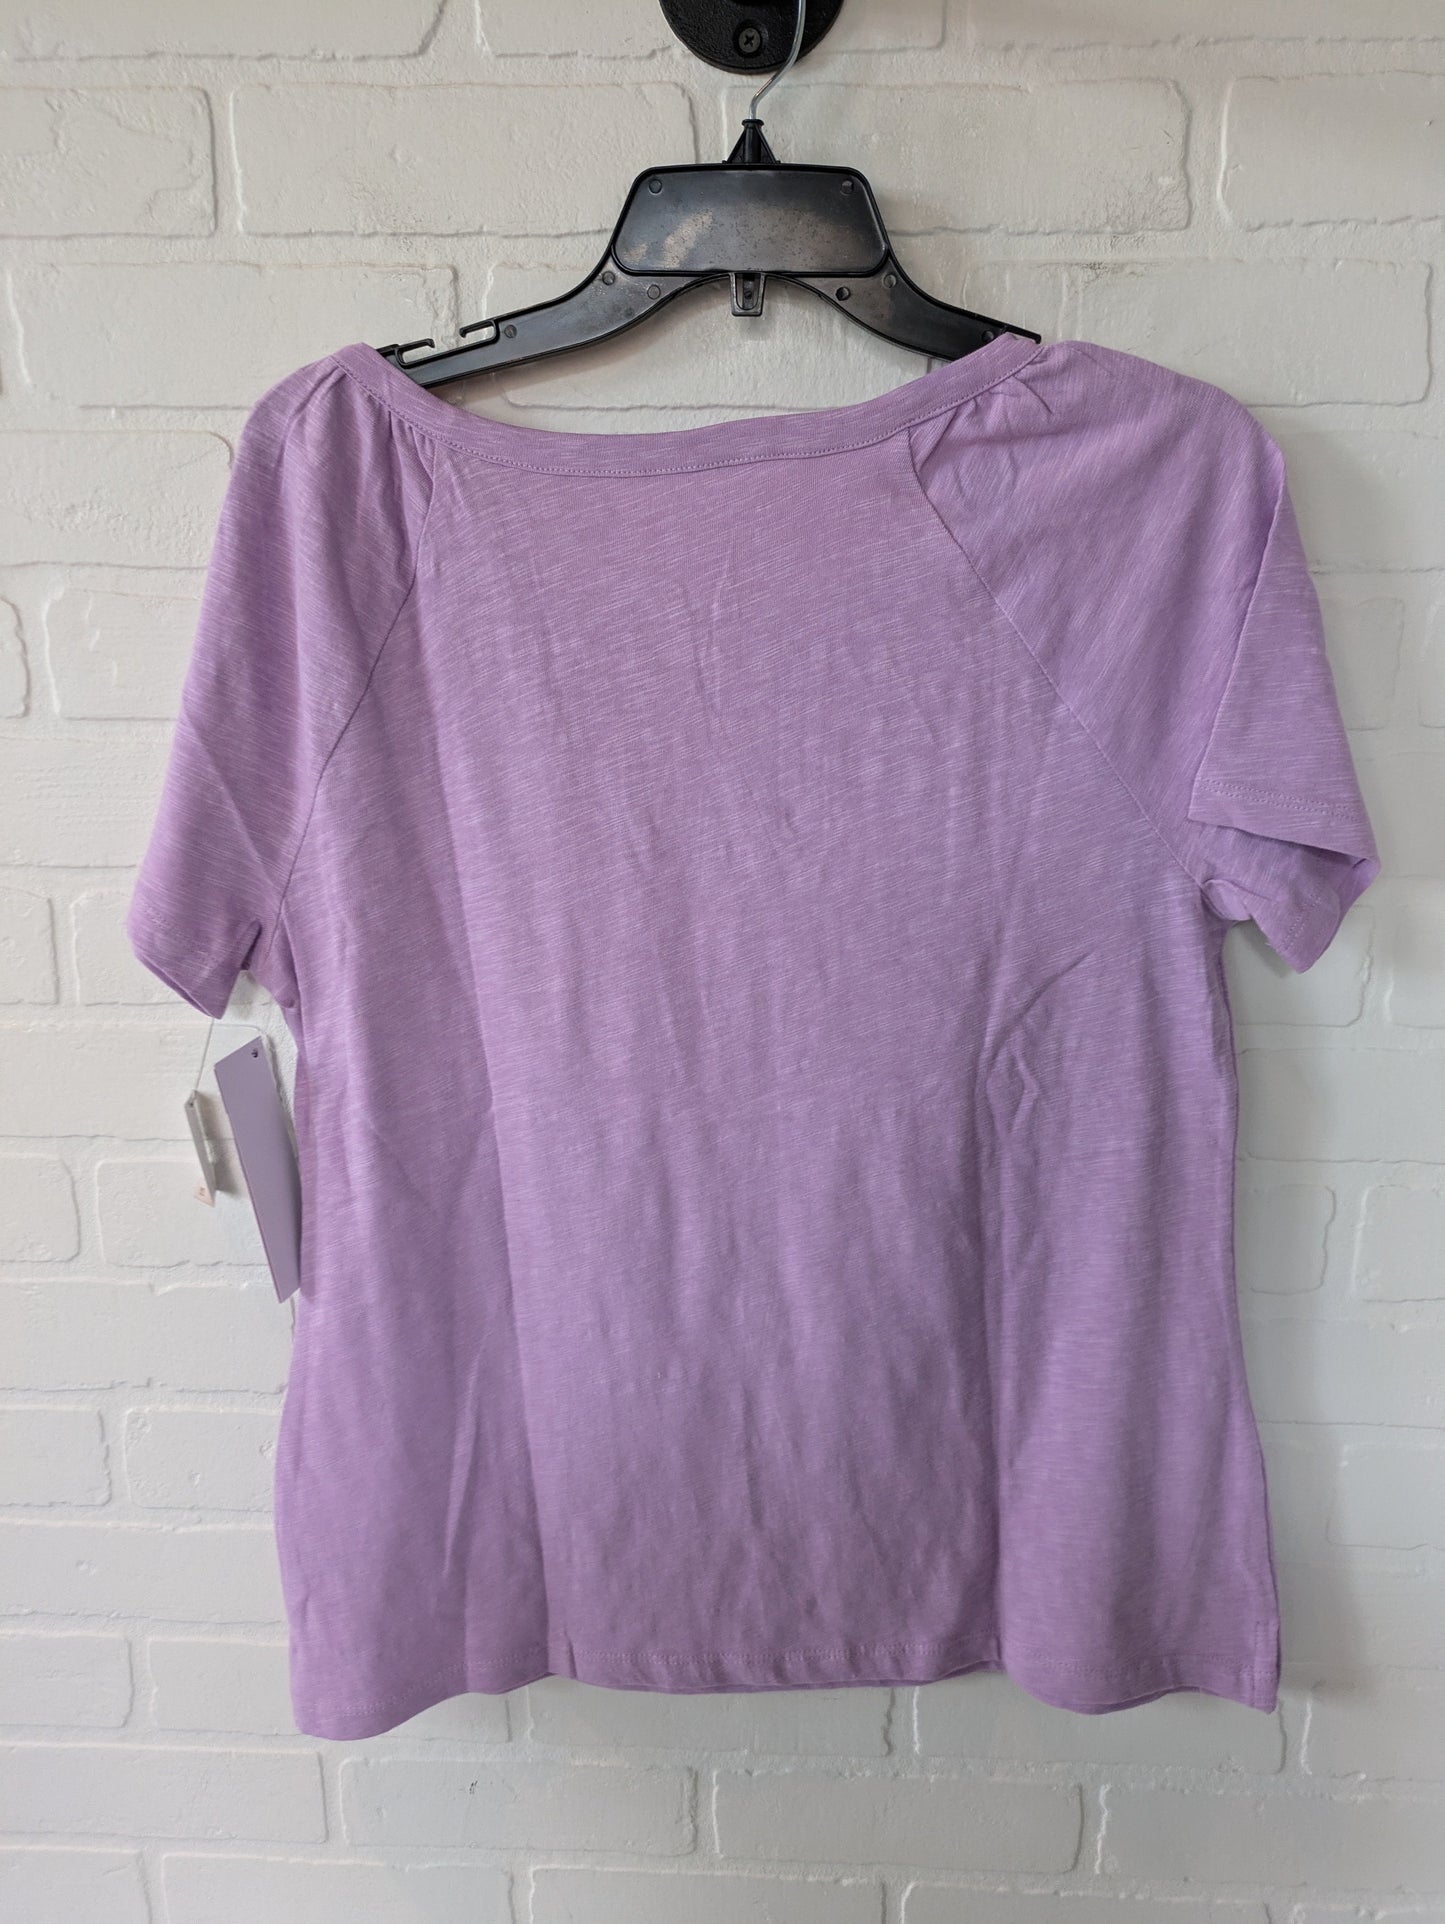 Purple Top Short Sleeve Talbots, Size M